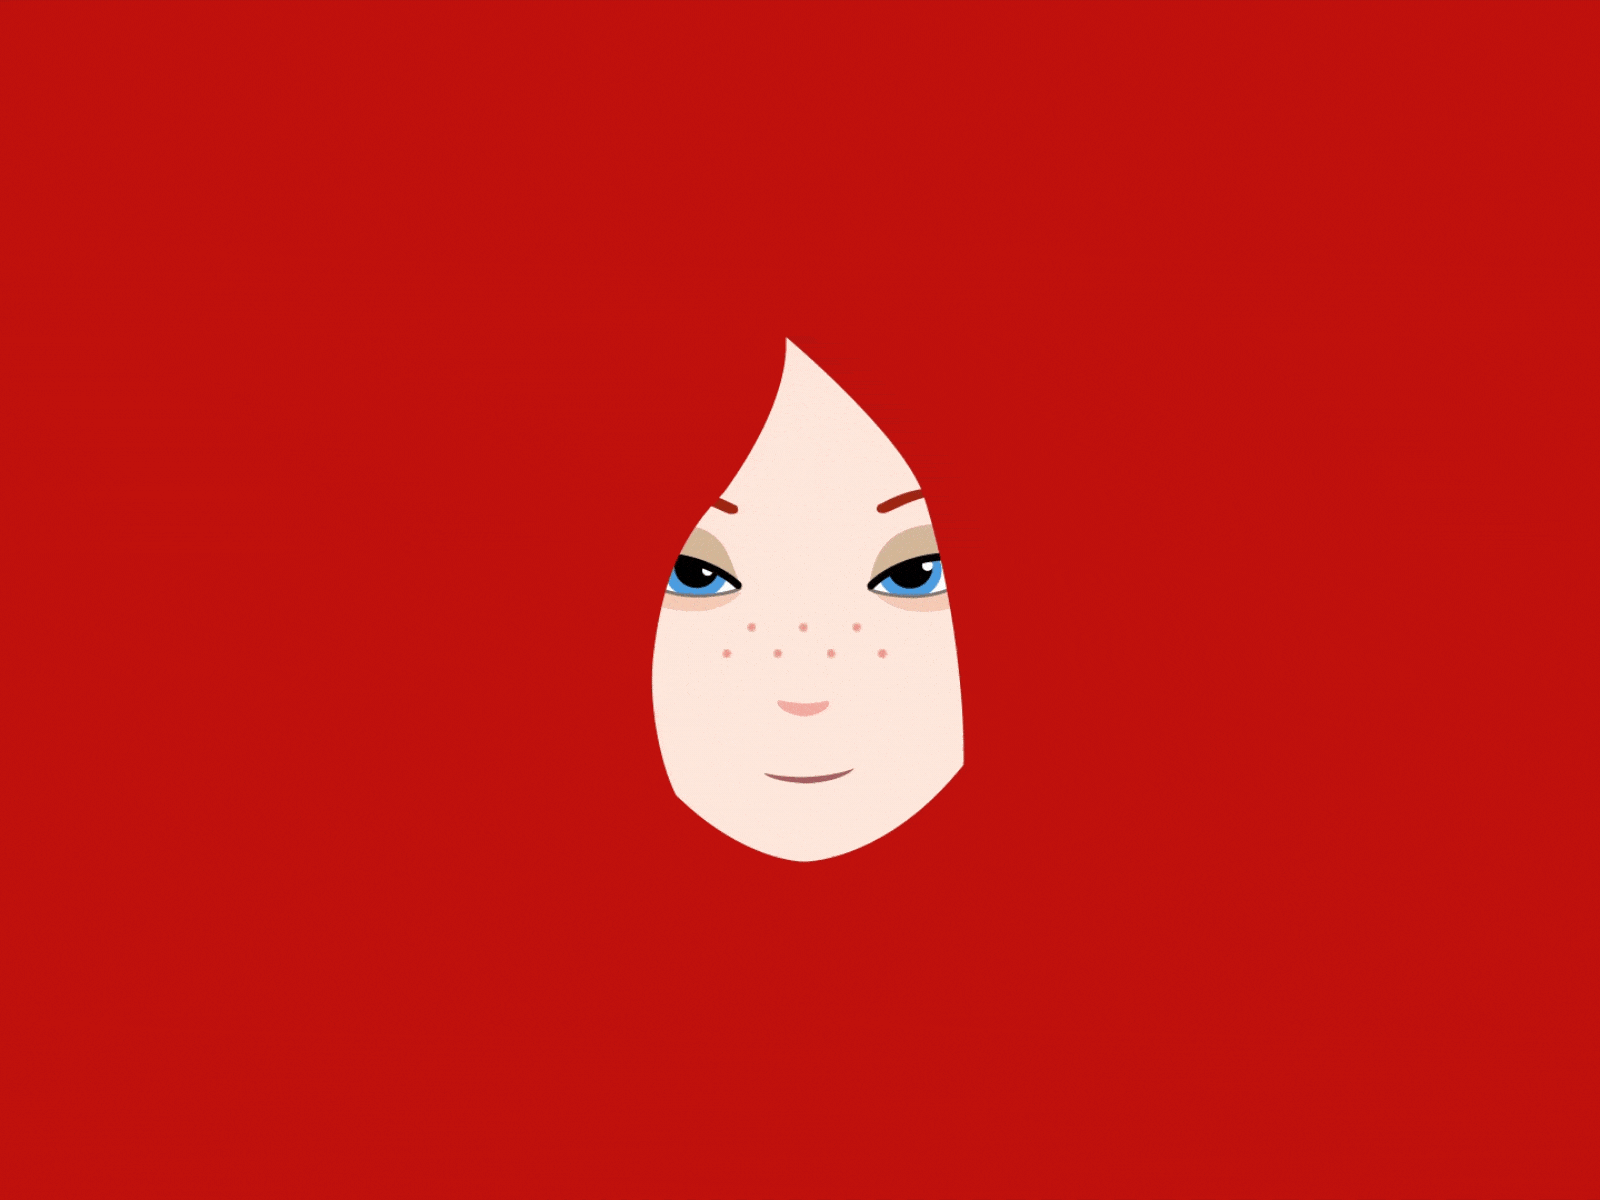 Red Hair Girl (Reanimated)